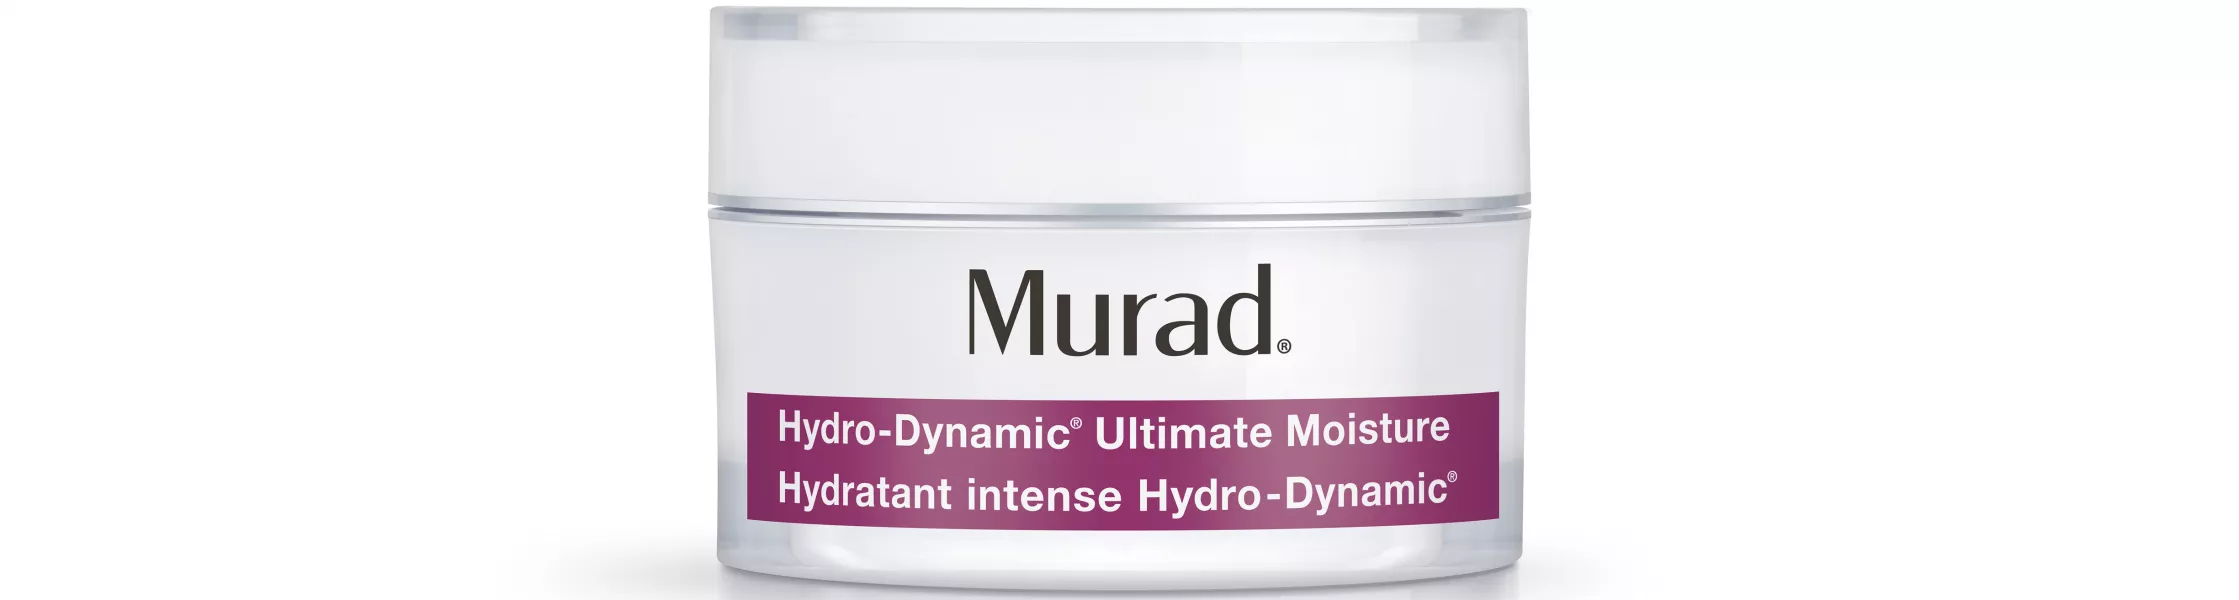 Murad Hydro-Dynamic Ultimate Moisture, £60 